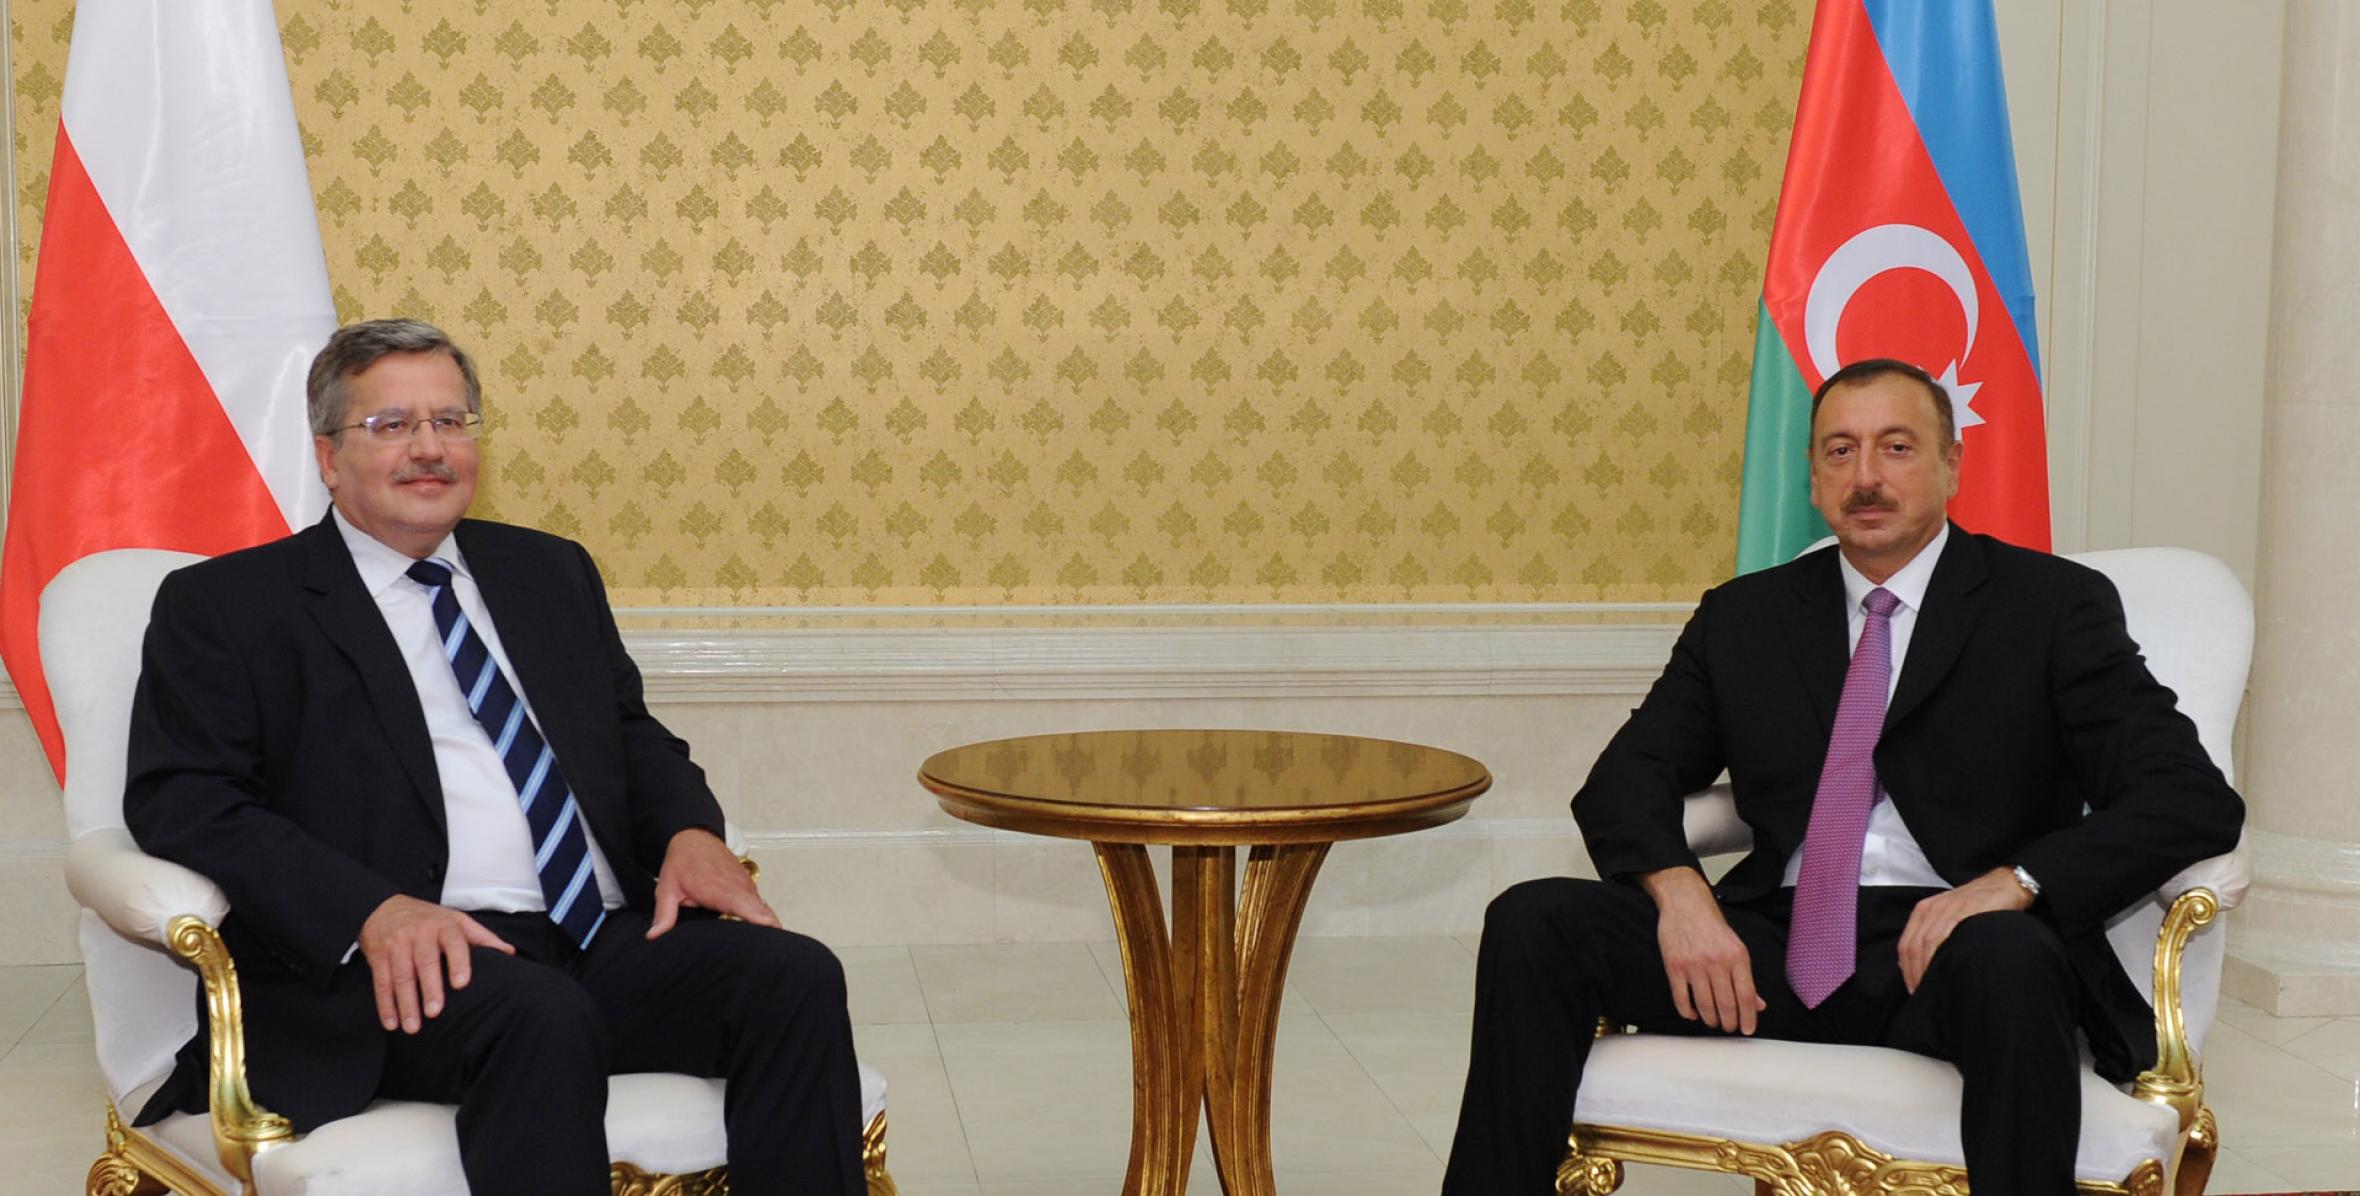 Ilham Aliyev had a face-to-face meeting with Polish President Bronislaw Komorowski